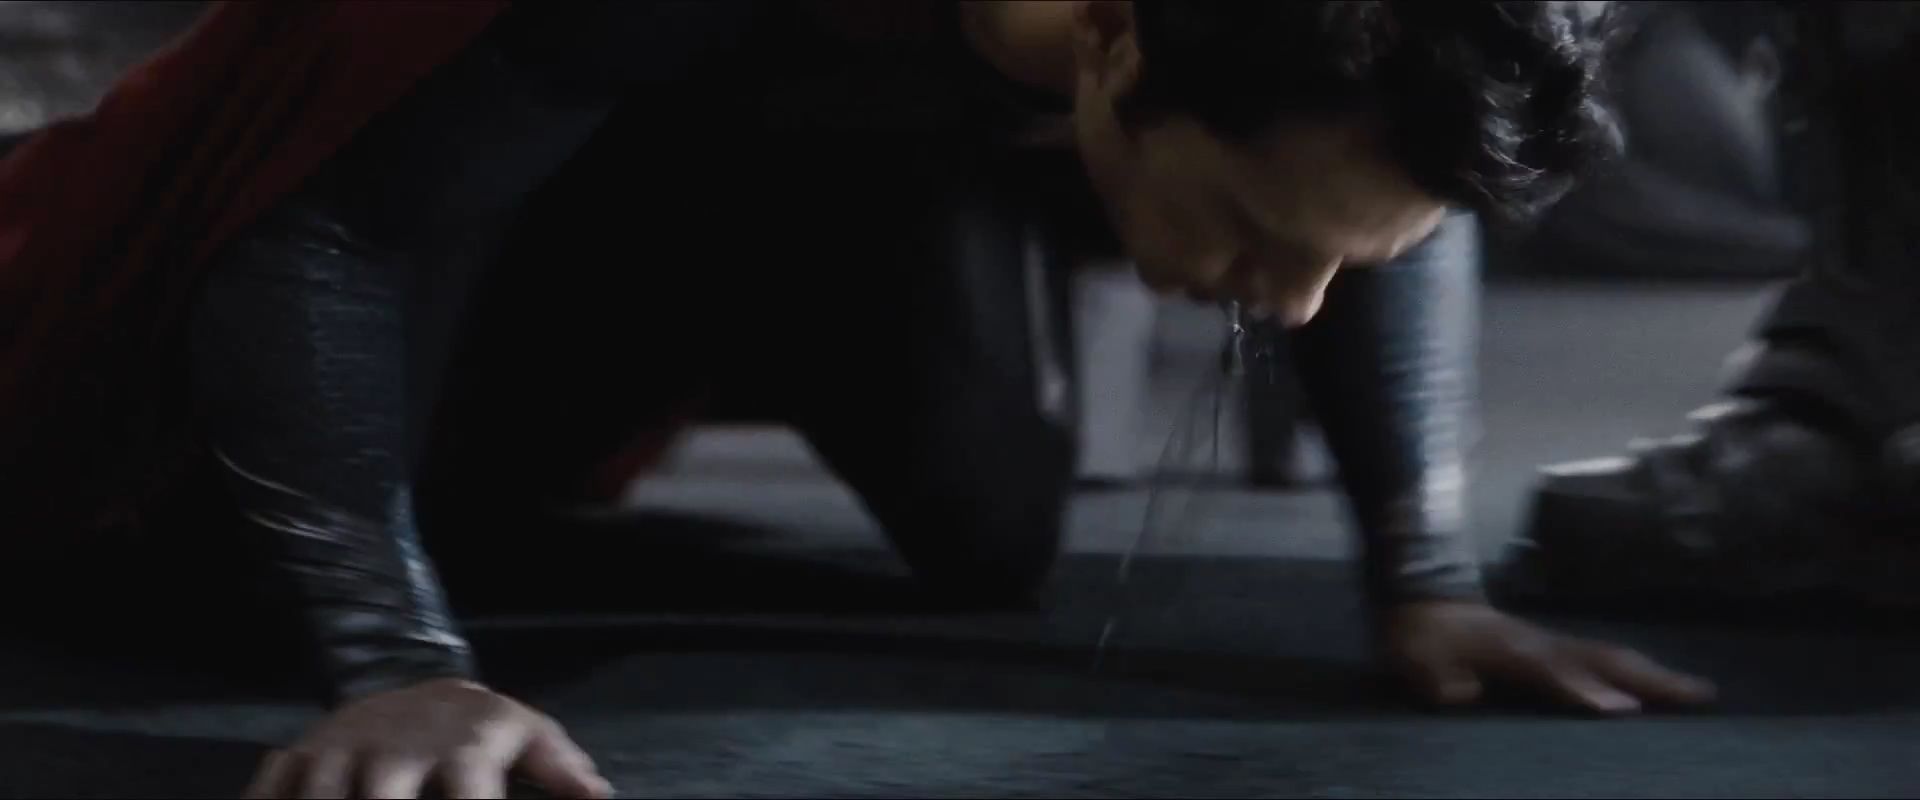 Man of Steel Trailer Images - Superman Vomiting